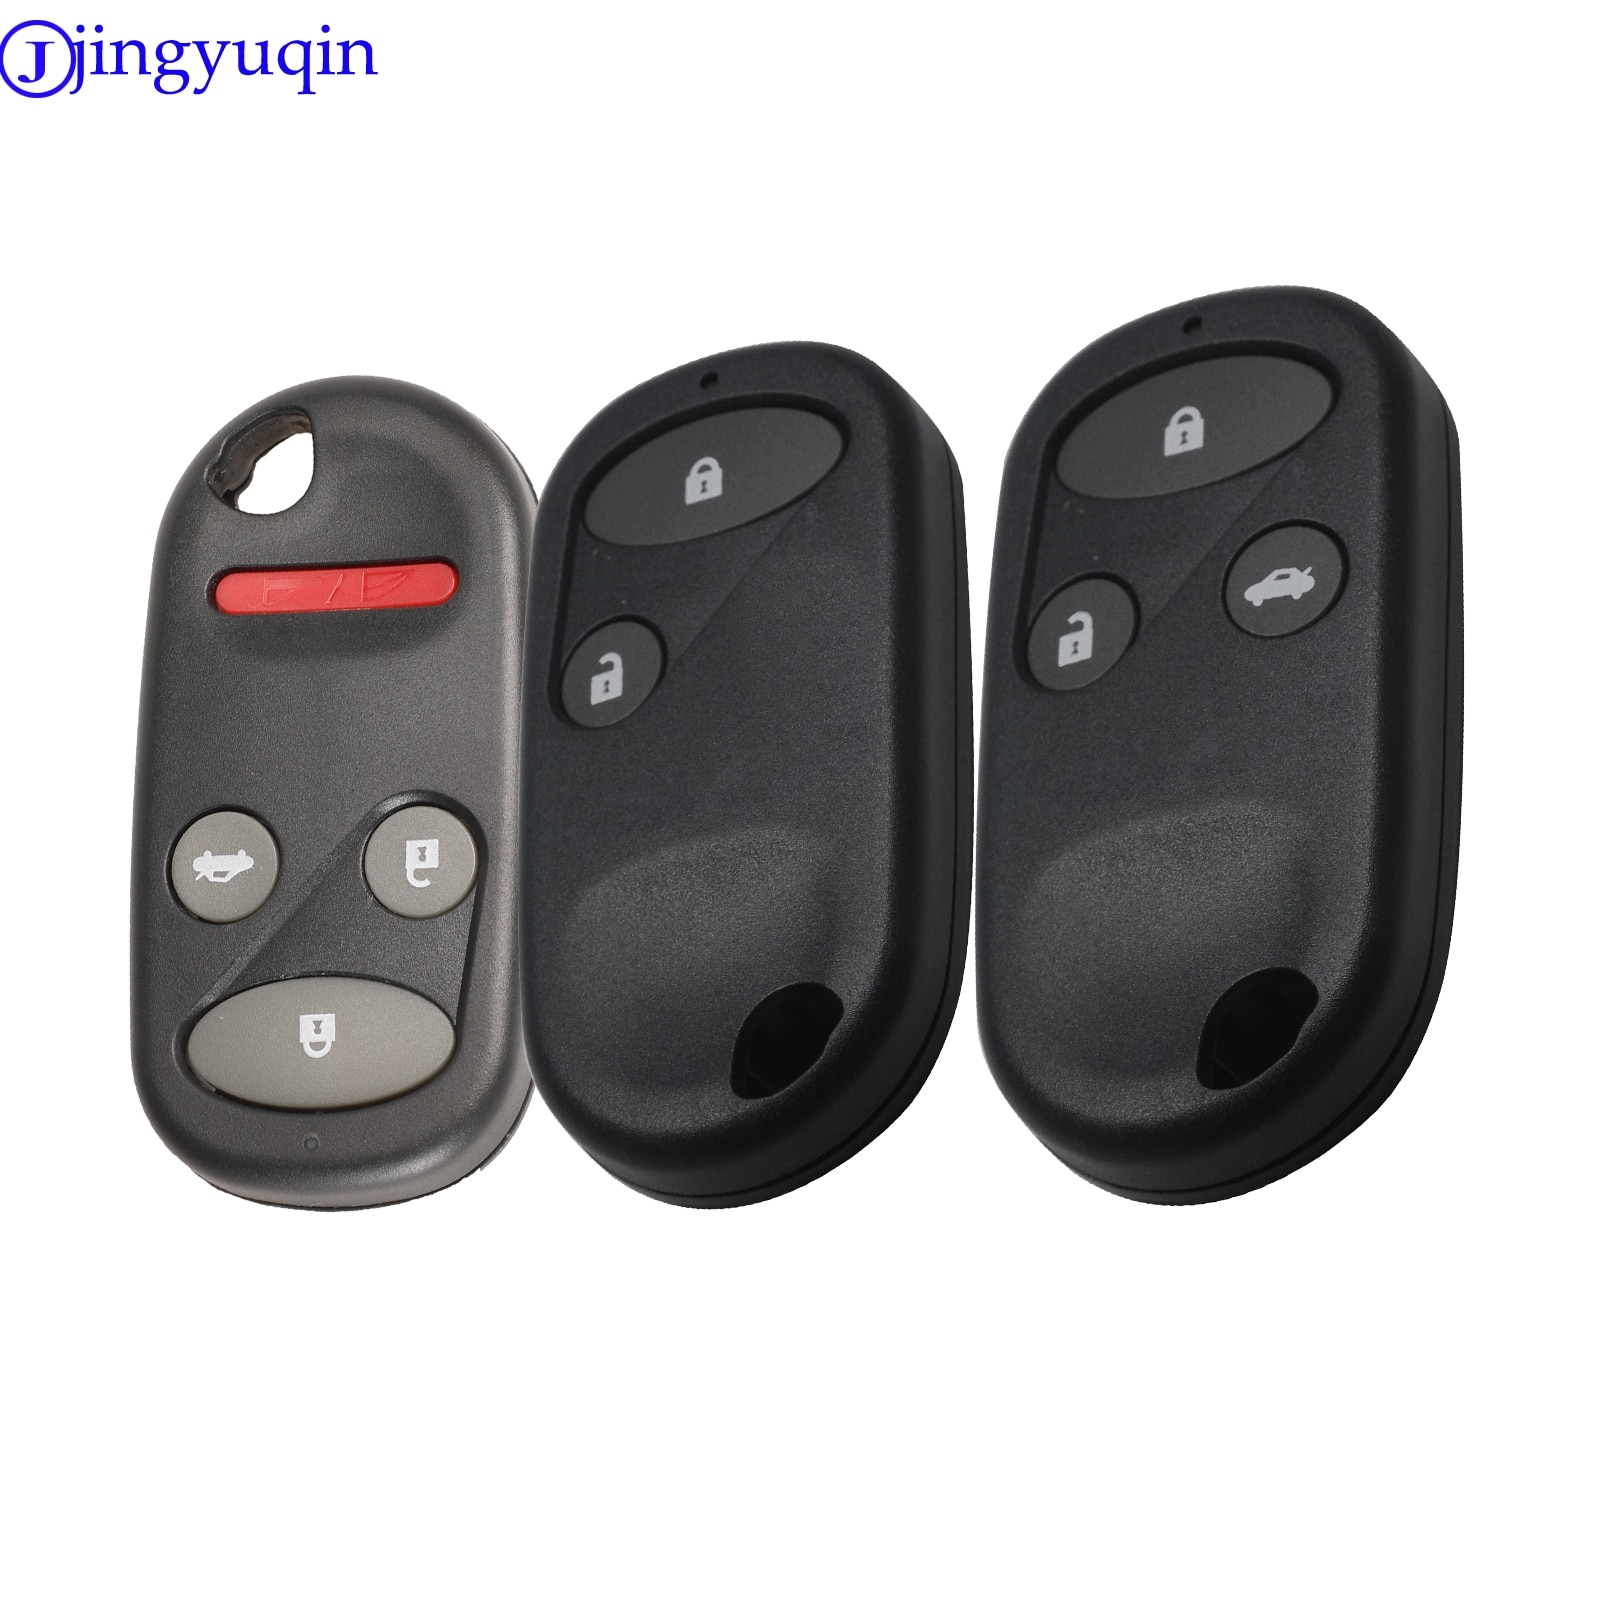 Jingyuqin 2/3/4 Knoppen keyless afstandsbediening sleutel auto shell is goed voor Honda Civic crv afstandsbediening sleutel